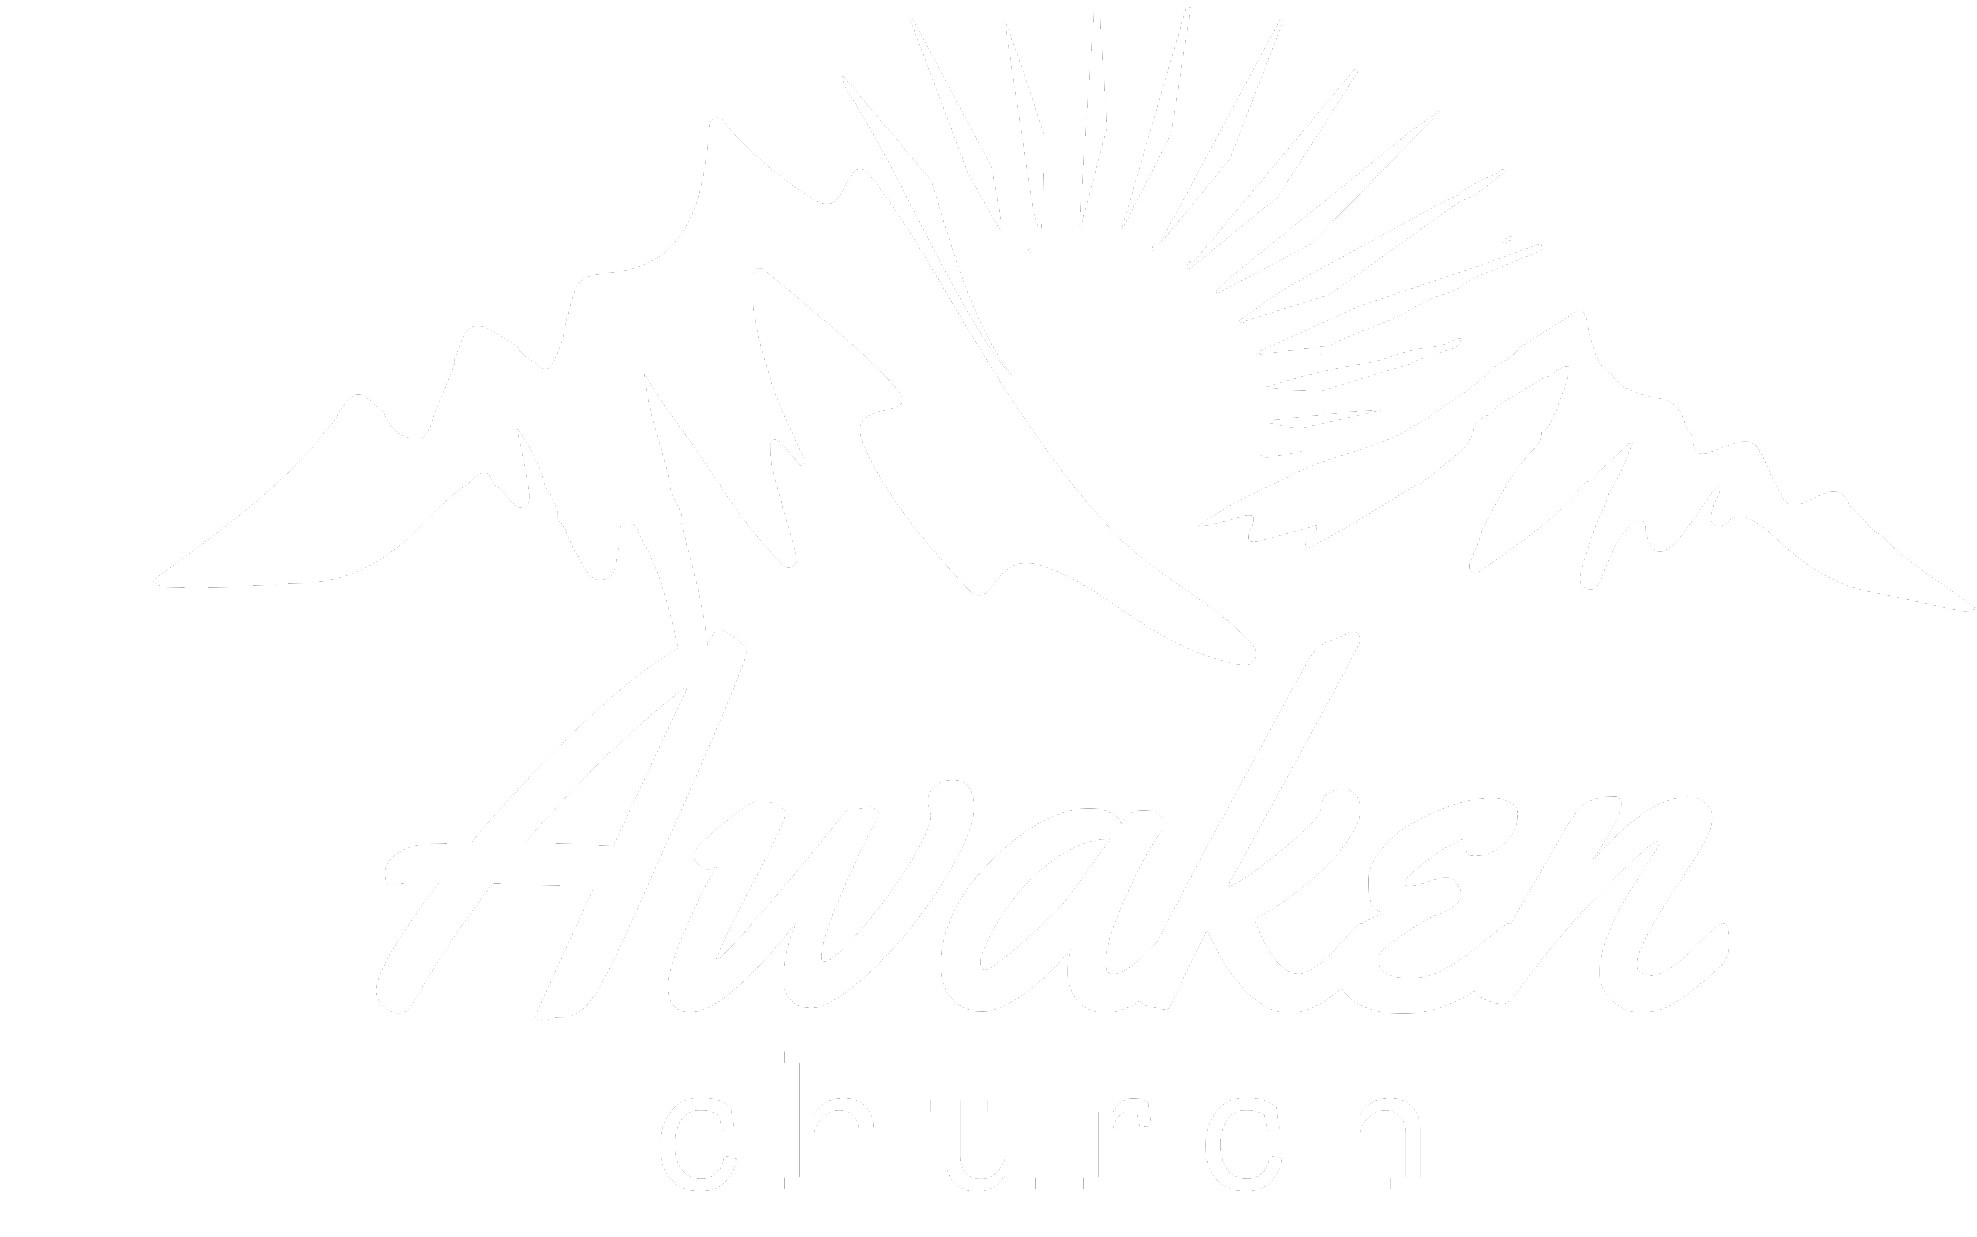 awaken church